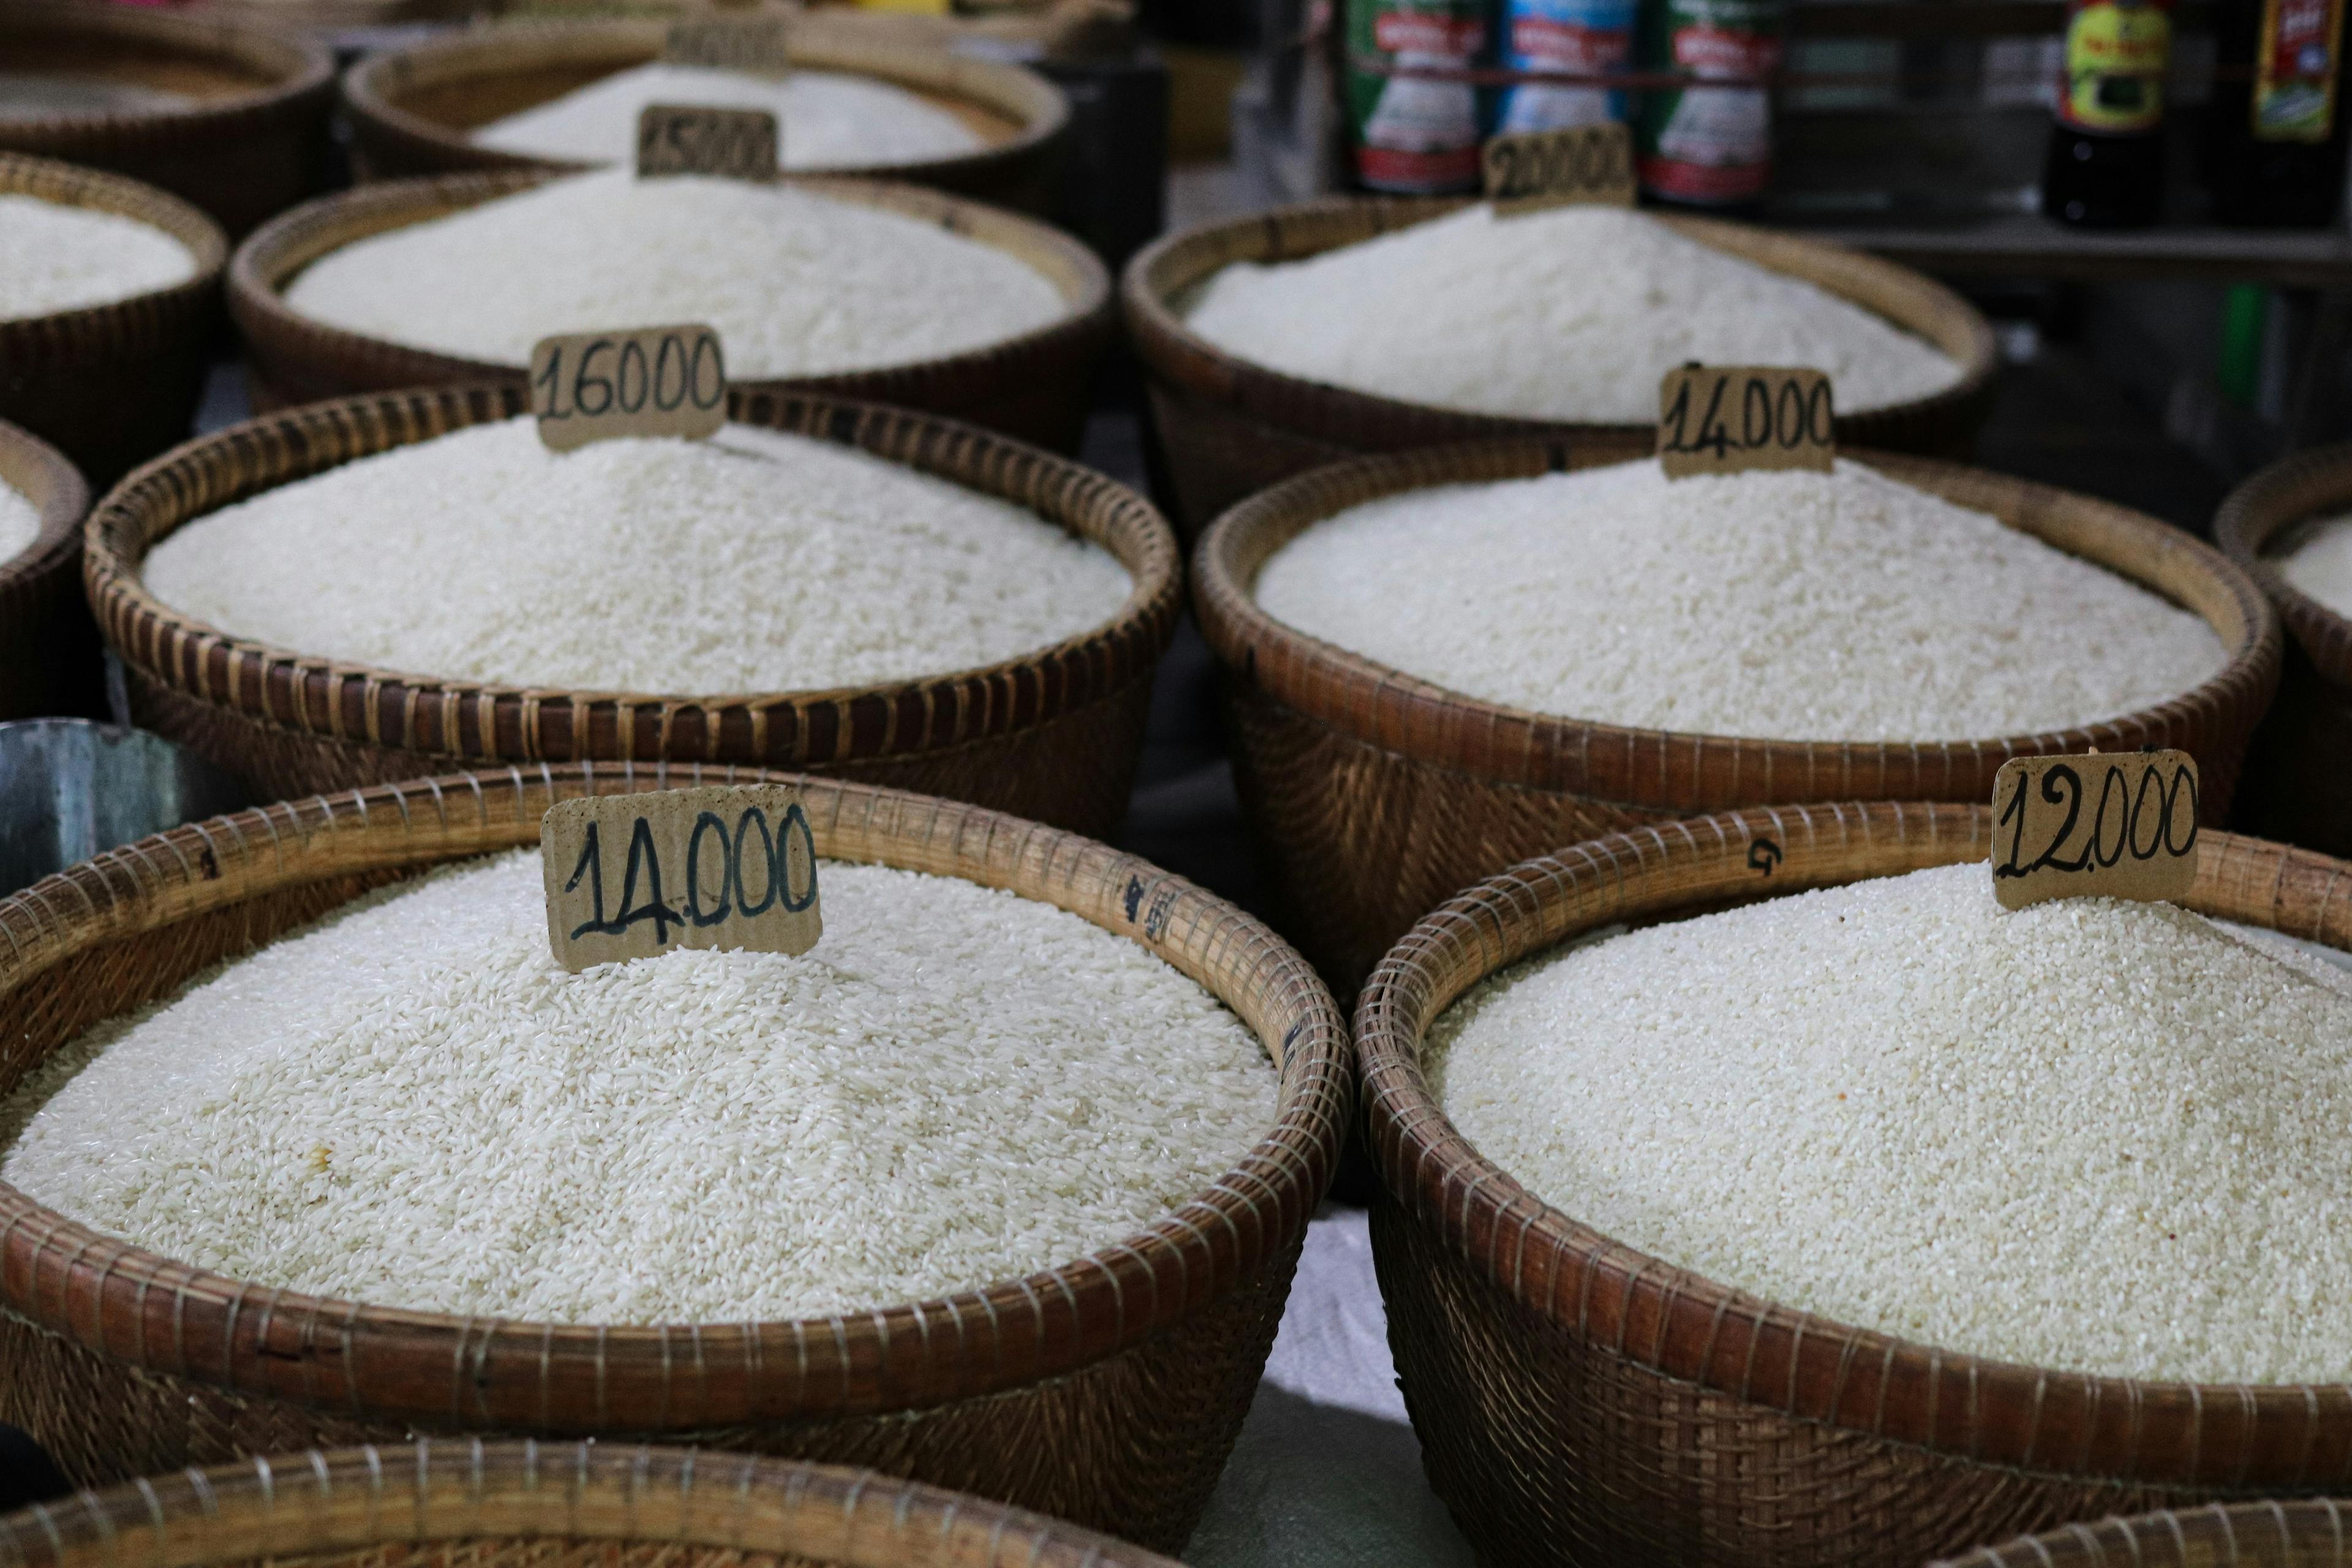 Analysis of Ricing Rice Prices